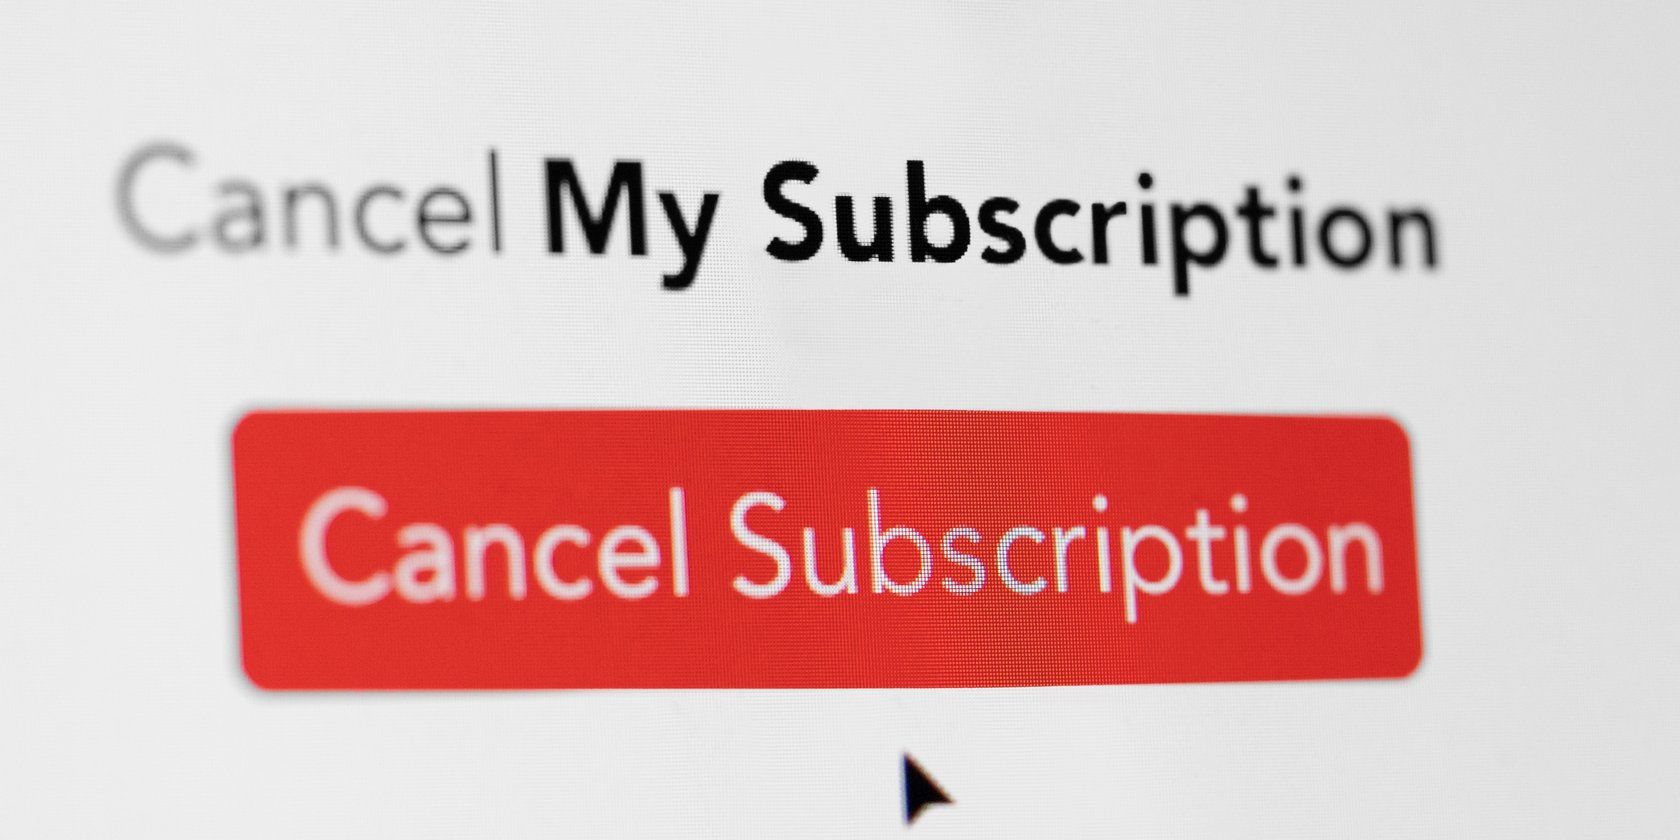 Subscription cancellation screen